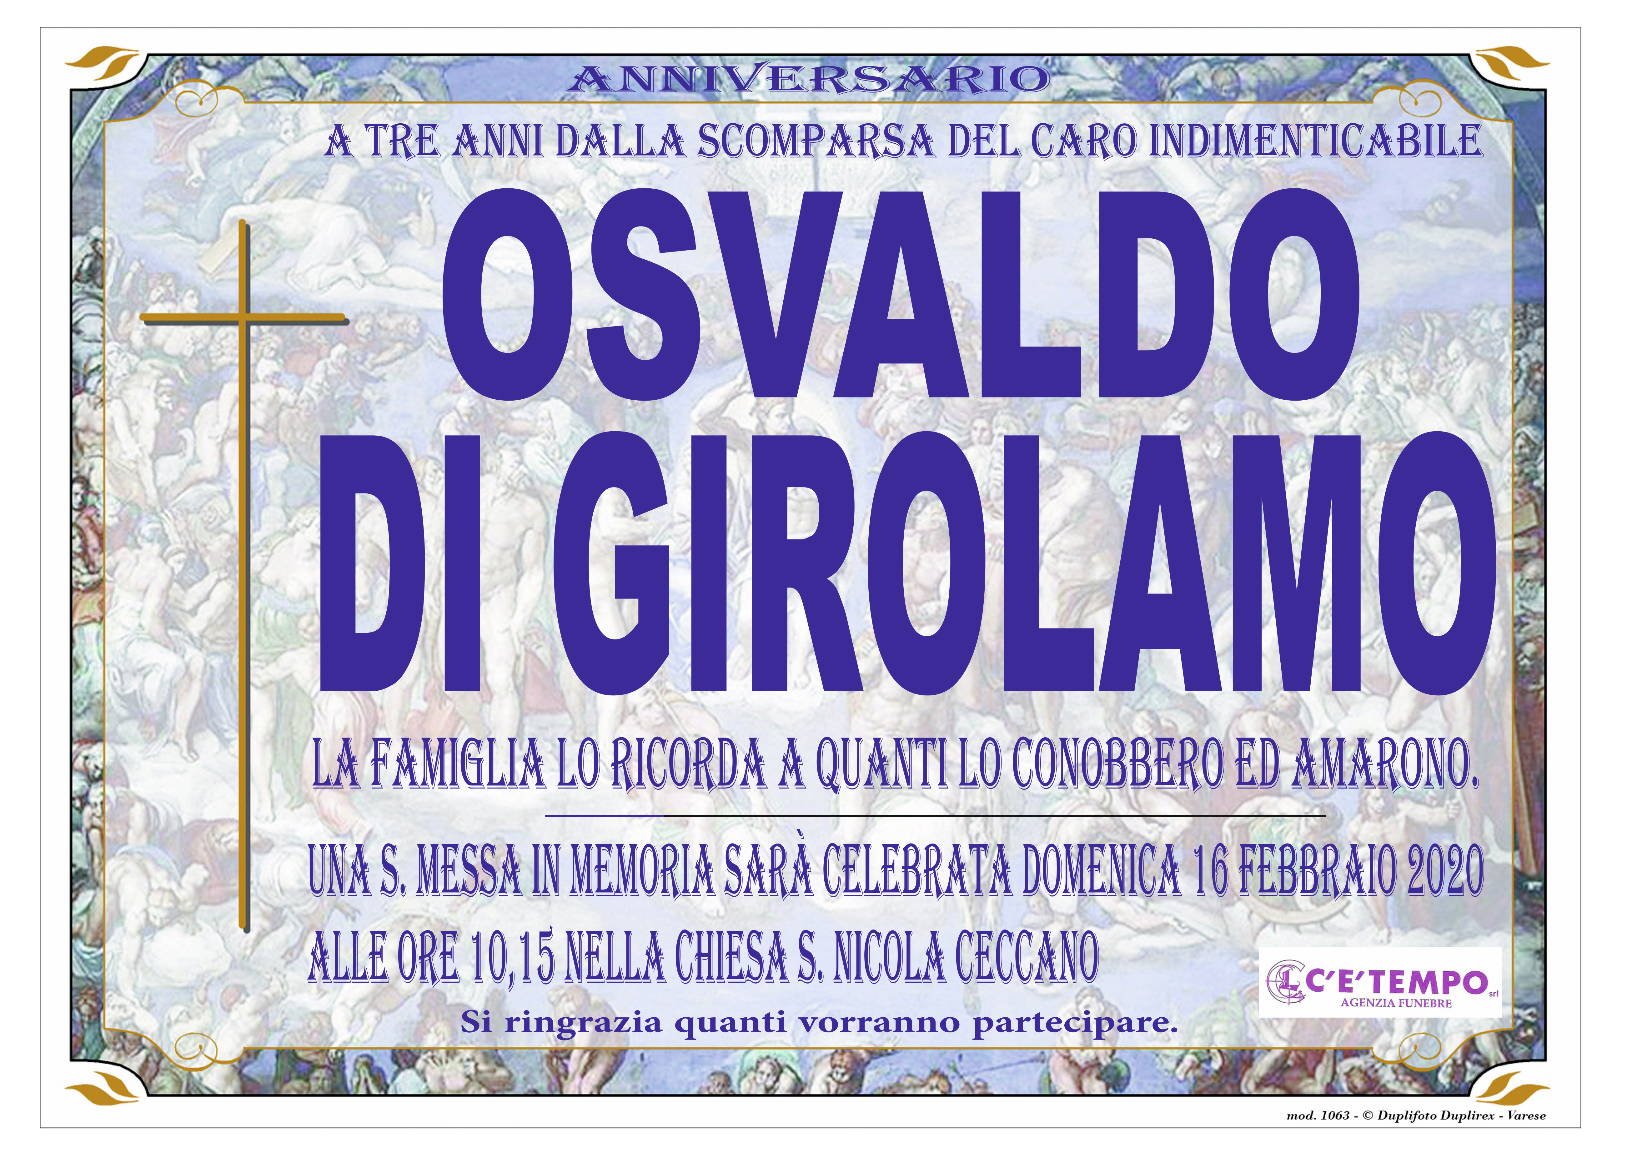 Osvaldo Di Girolamo